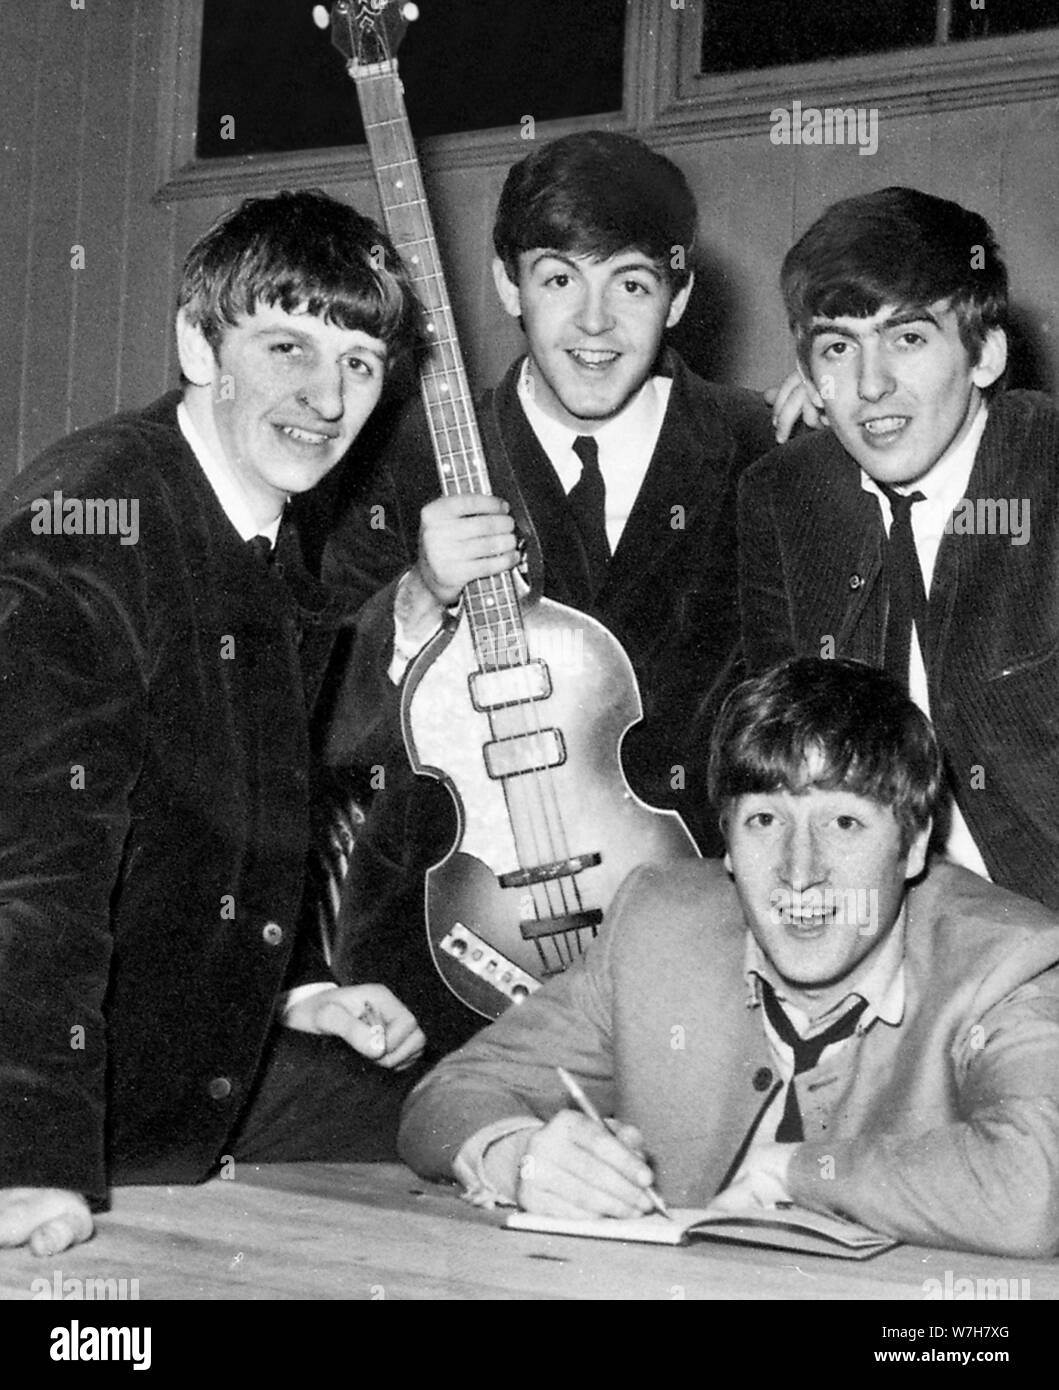 The Beatles backstage in 1962 Ringo Starr, Paul McCartney, George Harrison and John Lennon. The Beatles 1960s 'The Beatles' 'The Beatles' Stock Photo